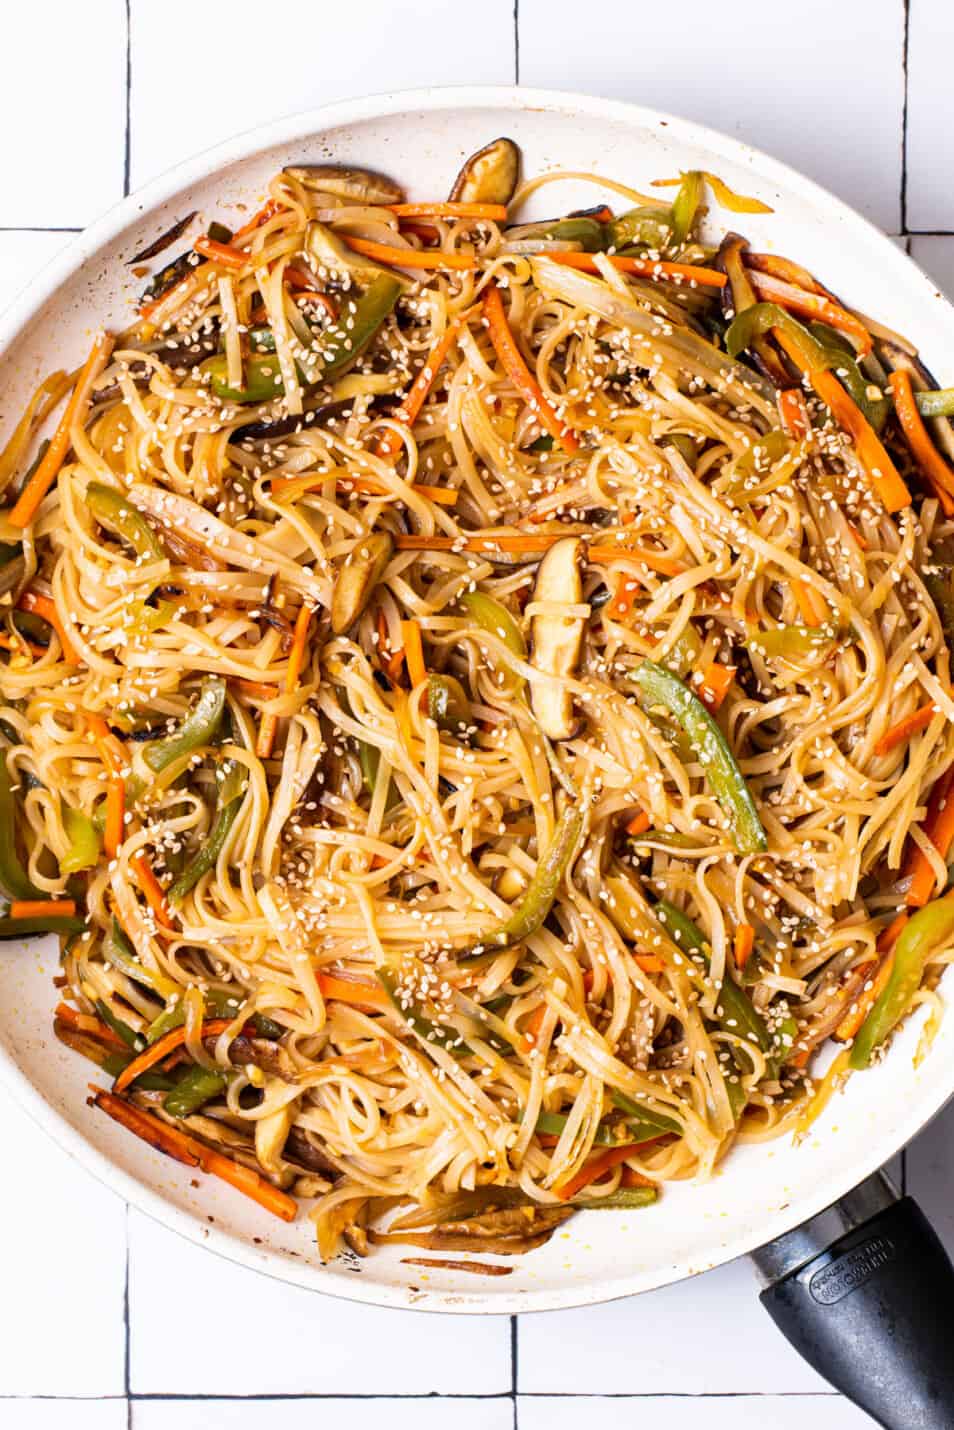 Stir Fried Noodles with Vegetables - The New Baguette